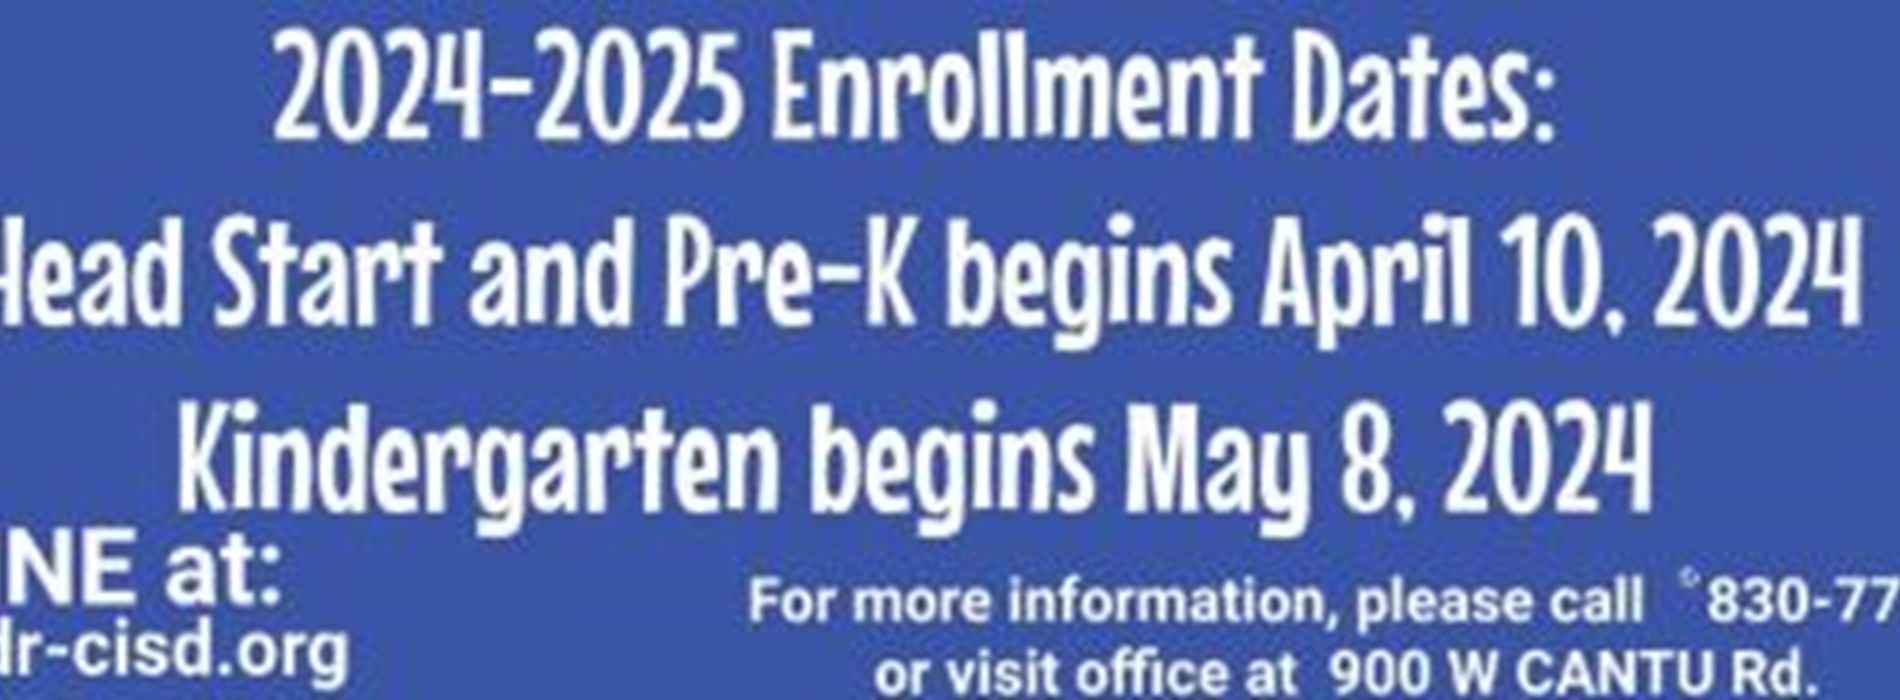 sfdr-online-enrollment-website-3.jpg